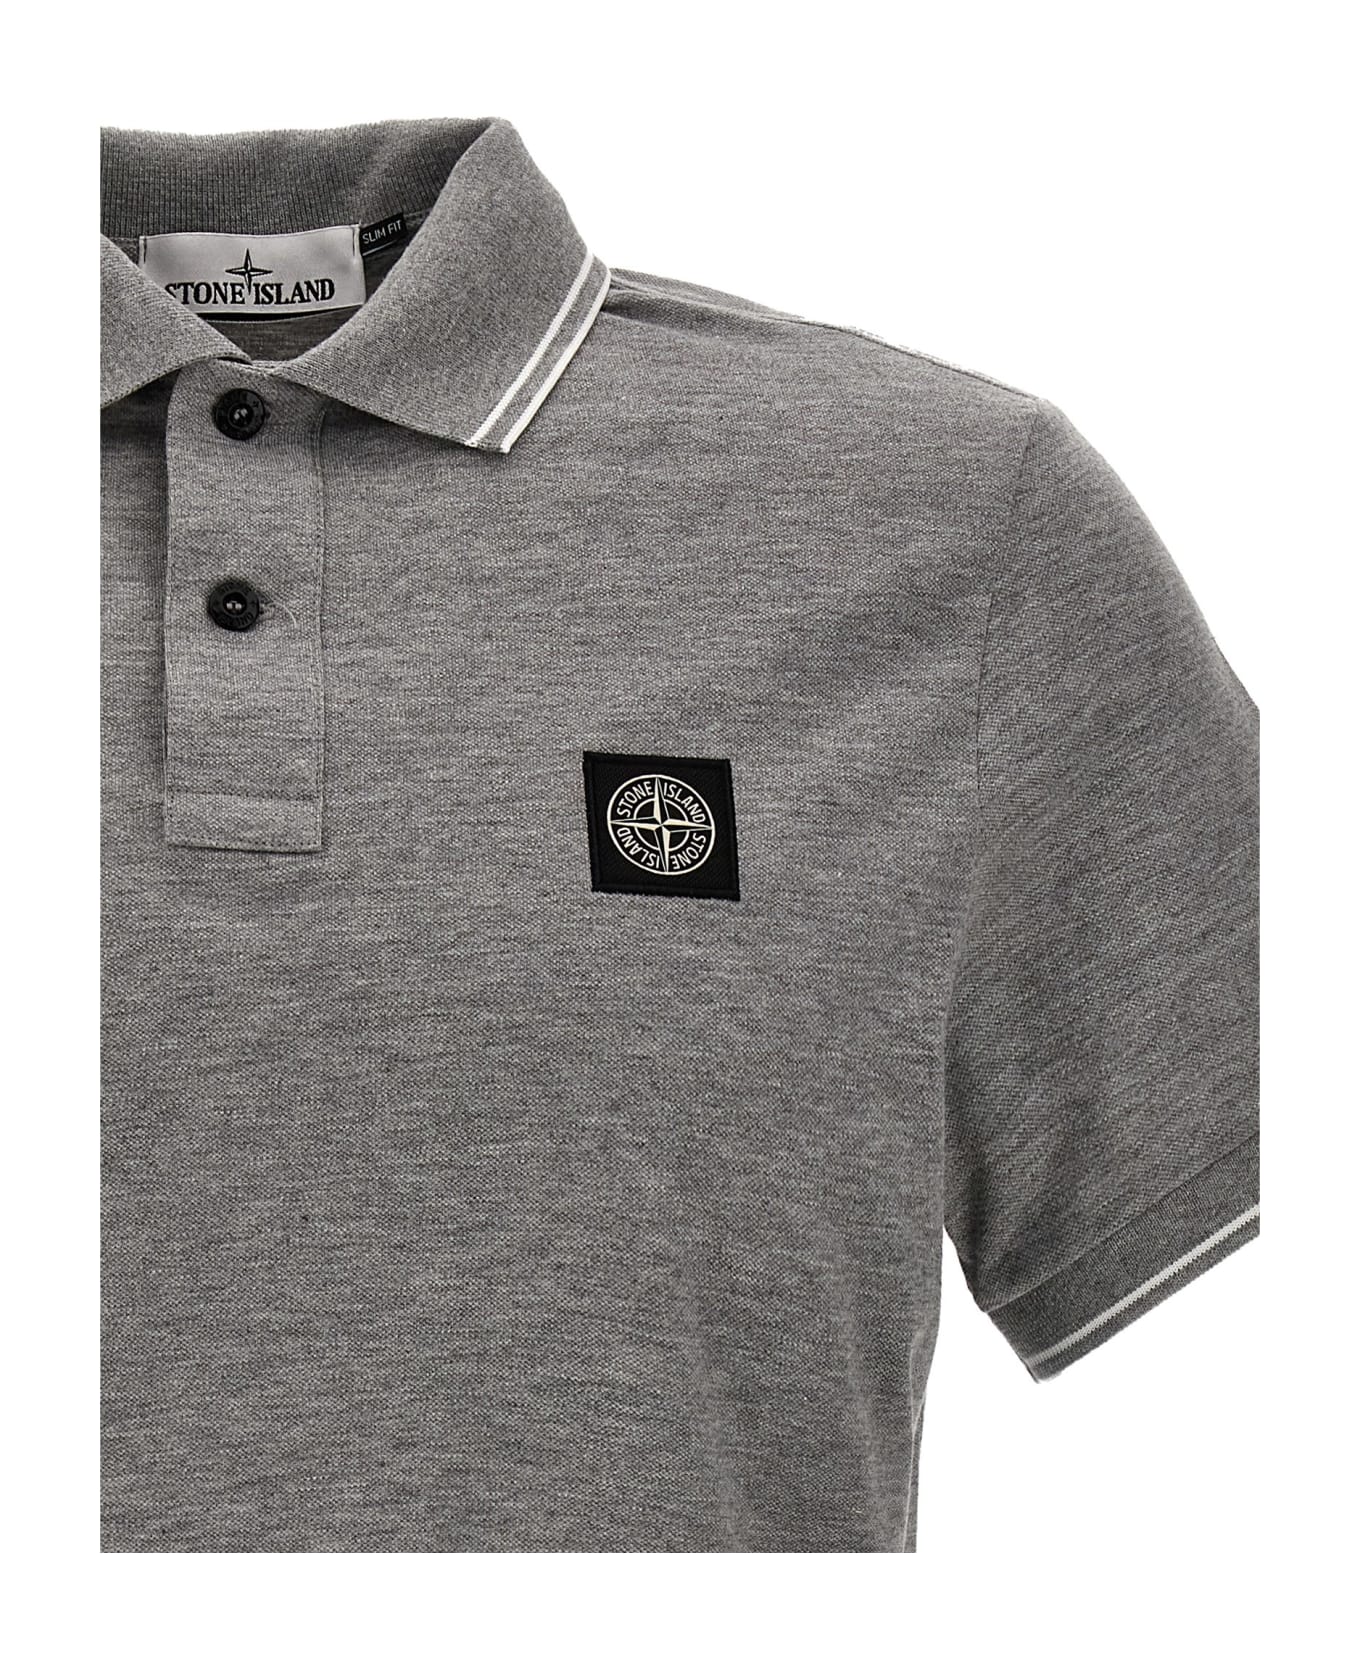 Stone Island Logo Polo Shirt - Gray ポロシャツ